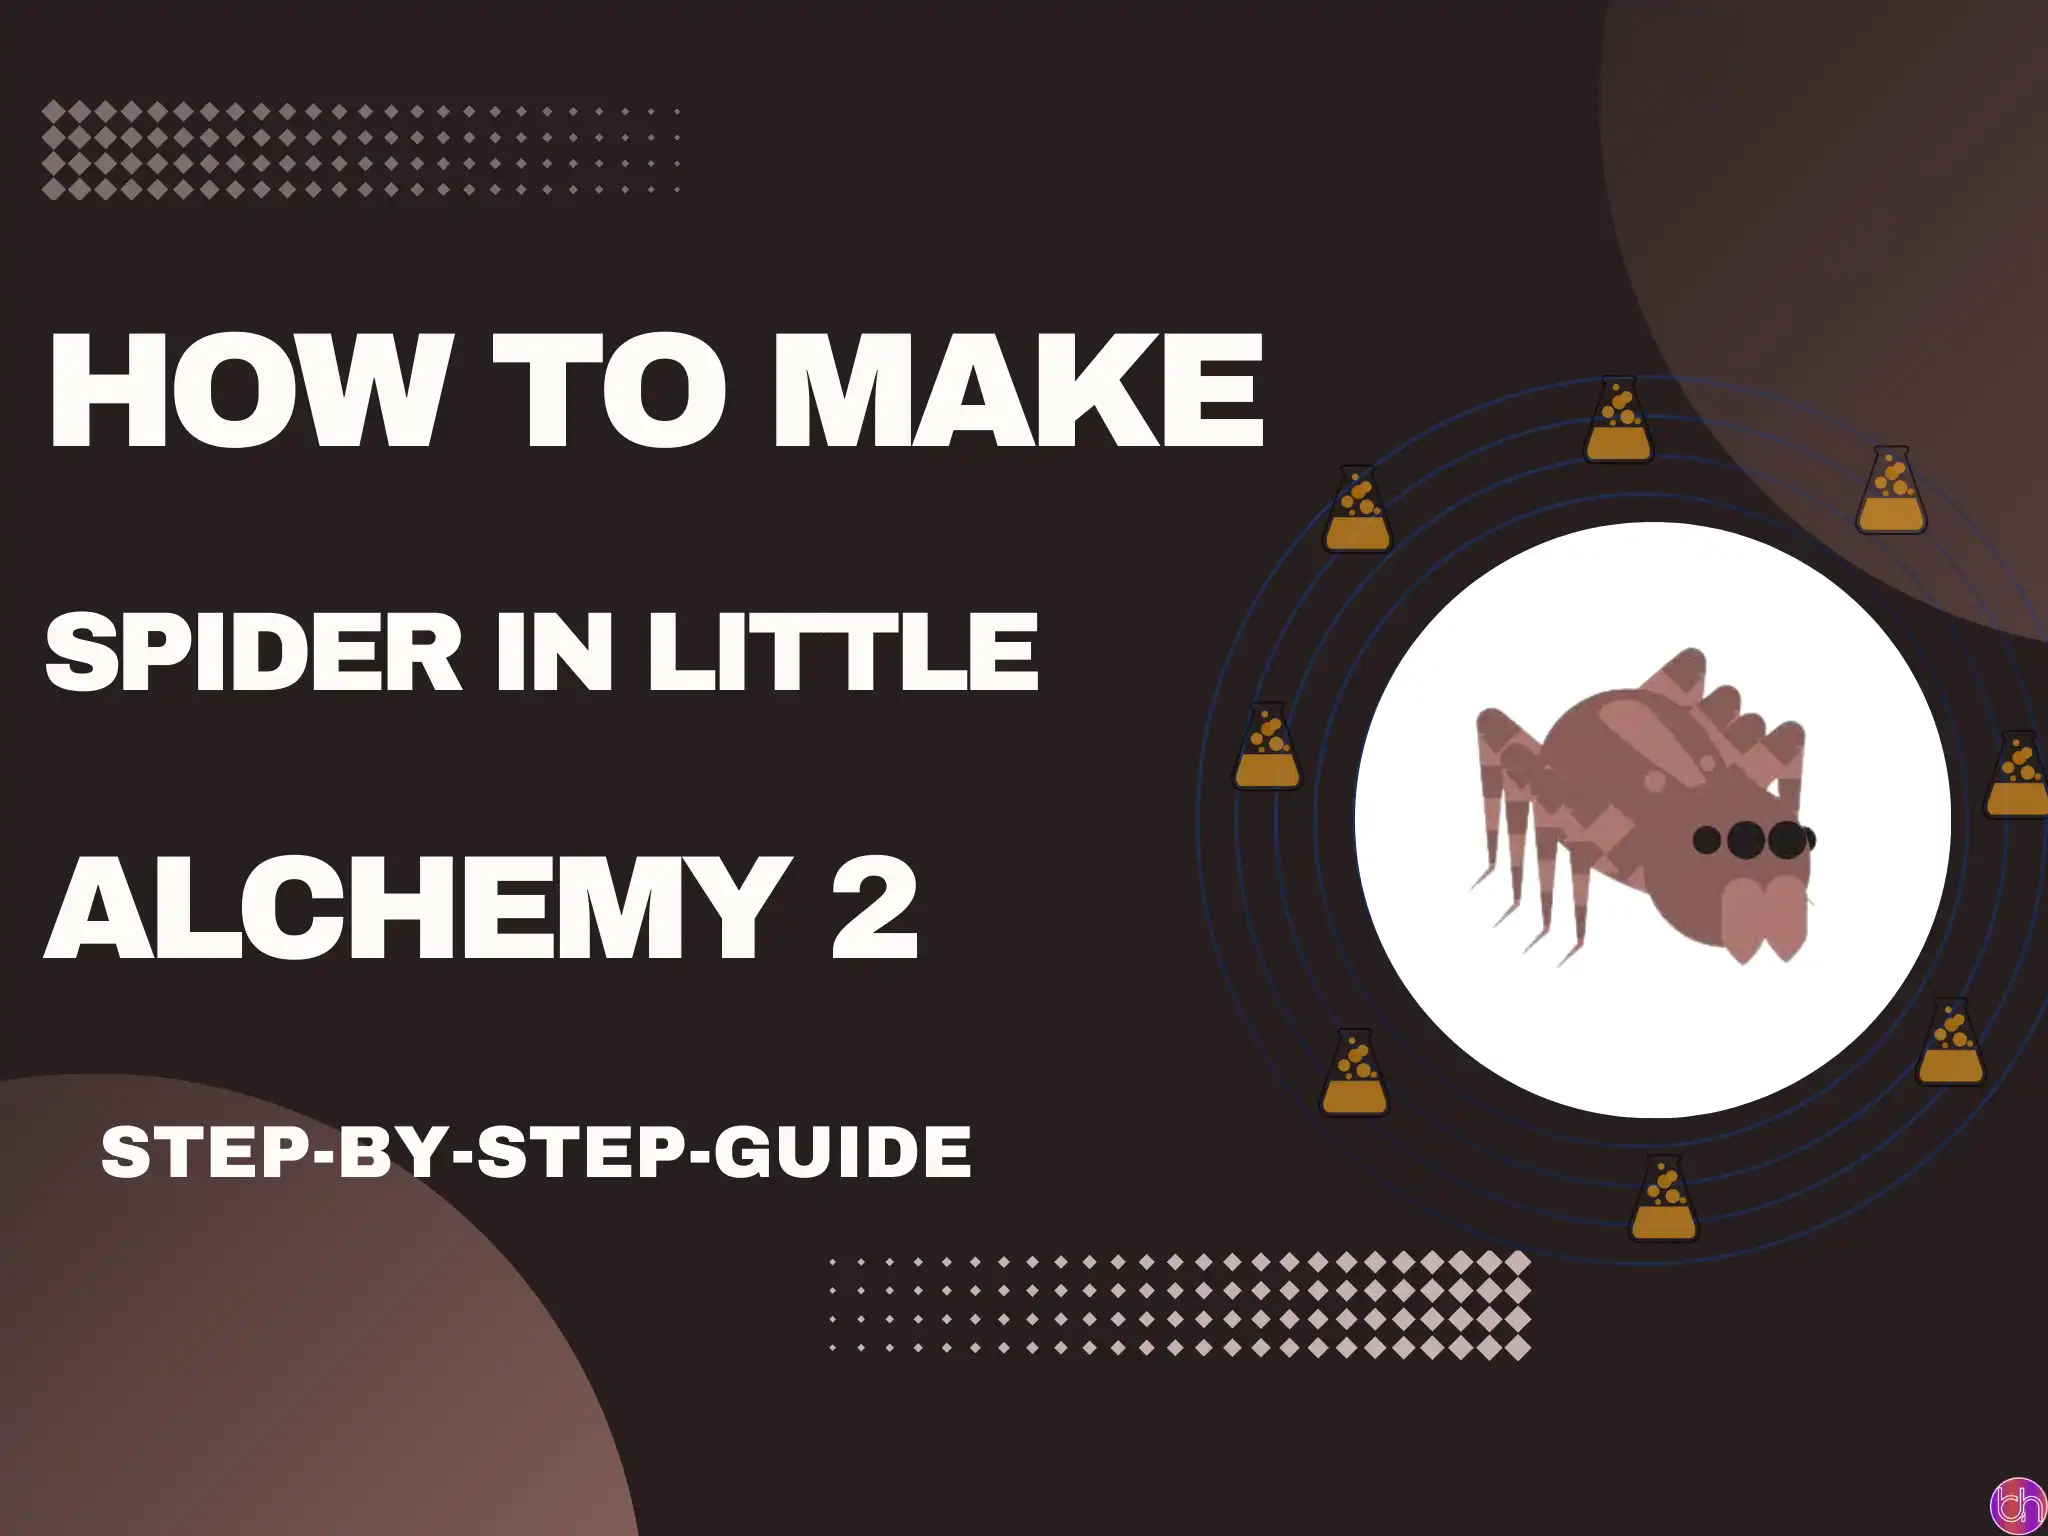 How to make Spider in Little Alchemy 2